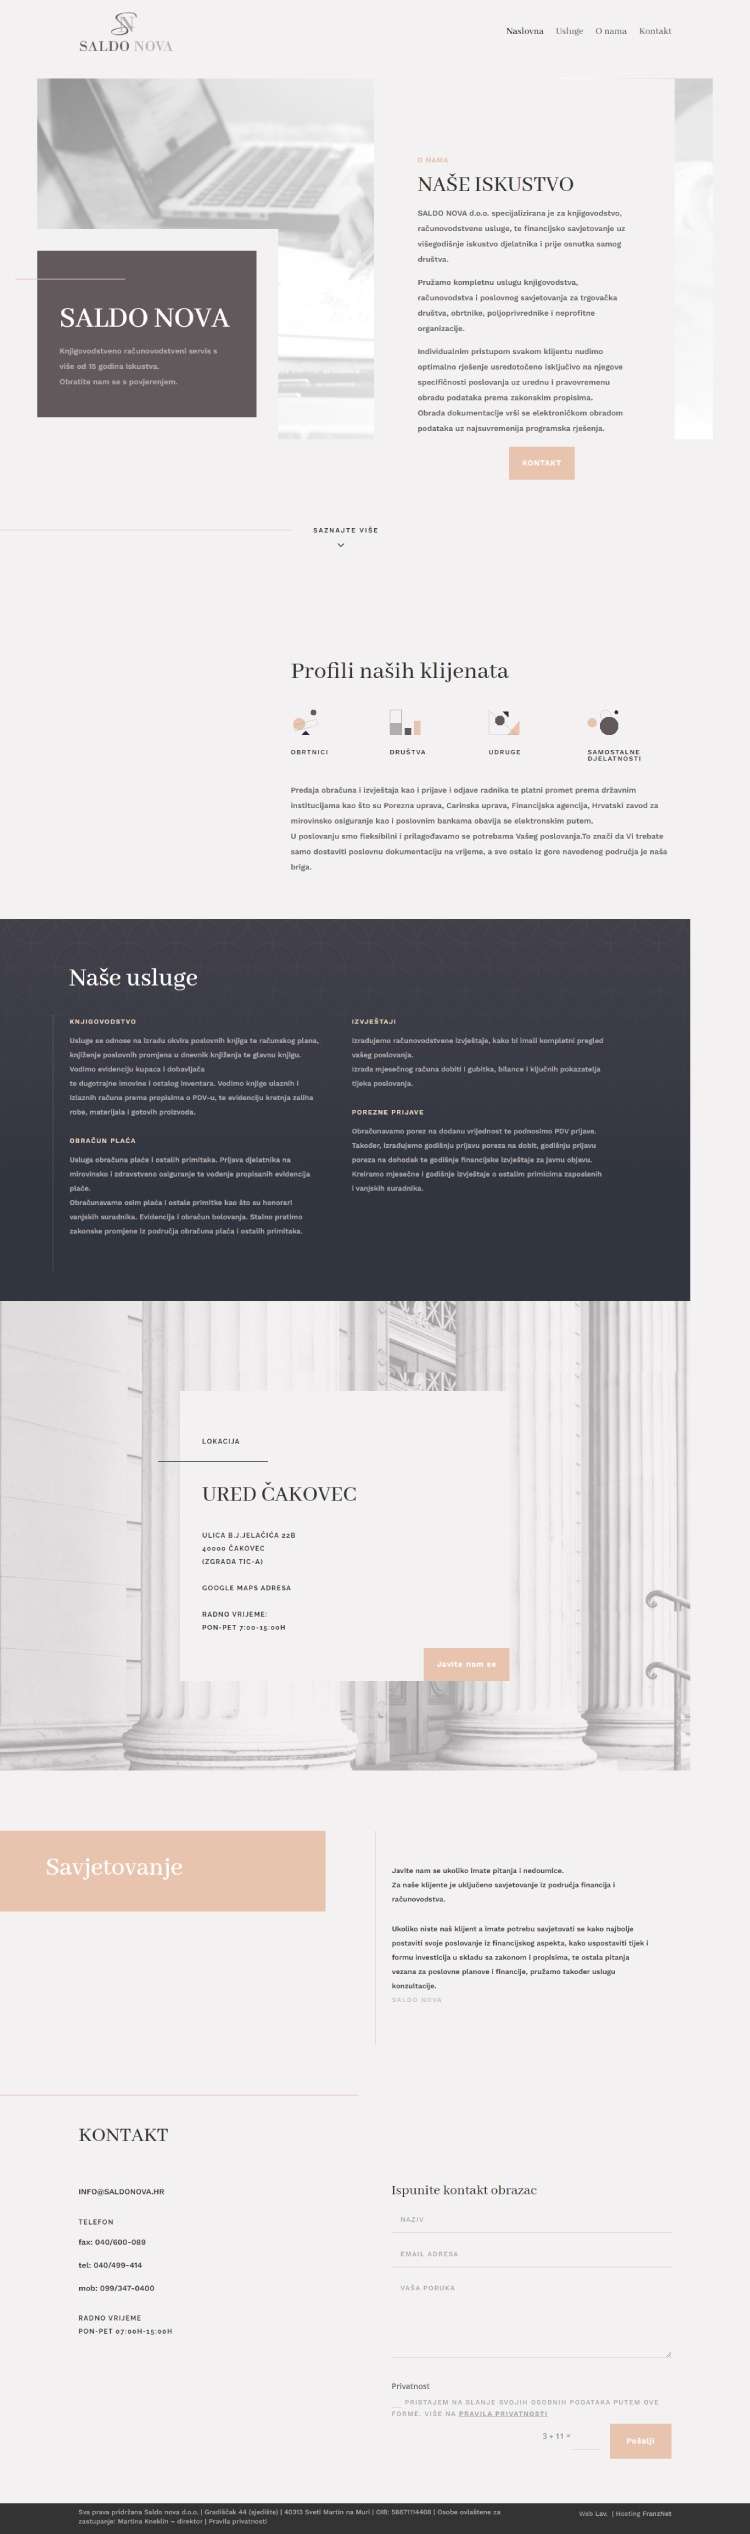 Meli web designer portfolio - kindergarten Gumbek page